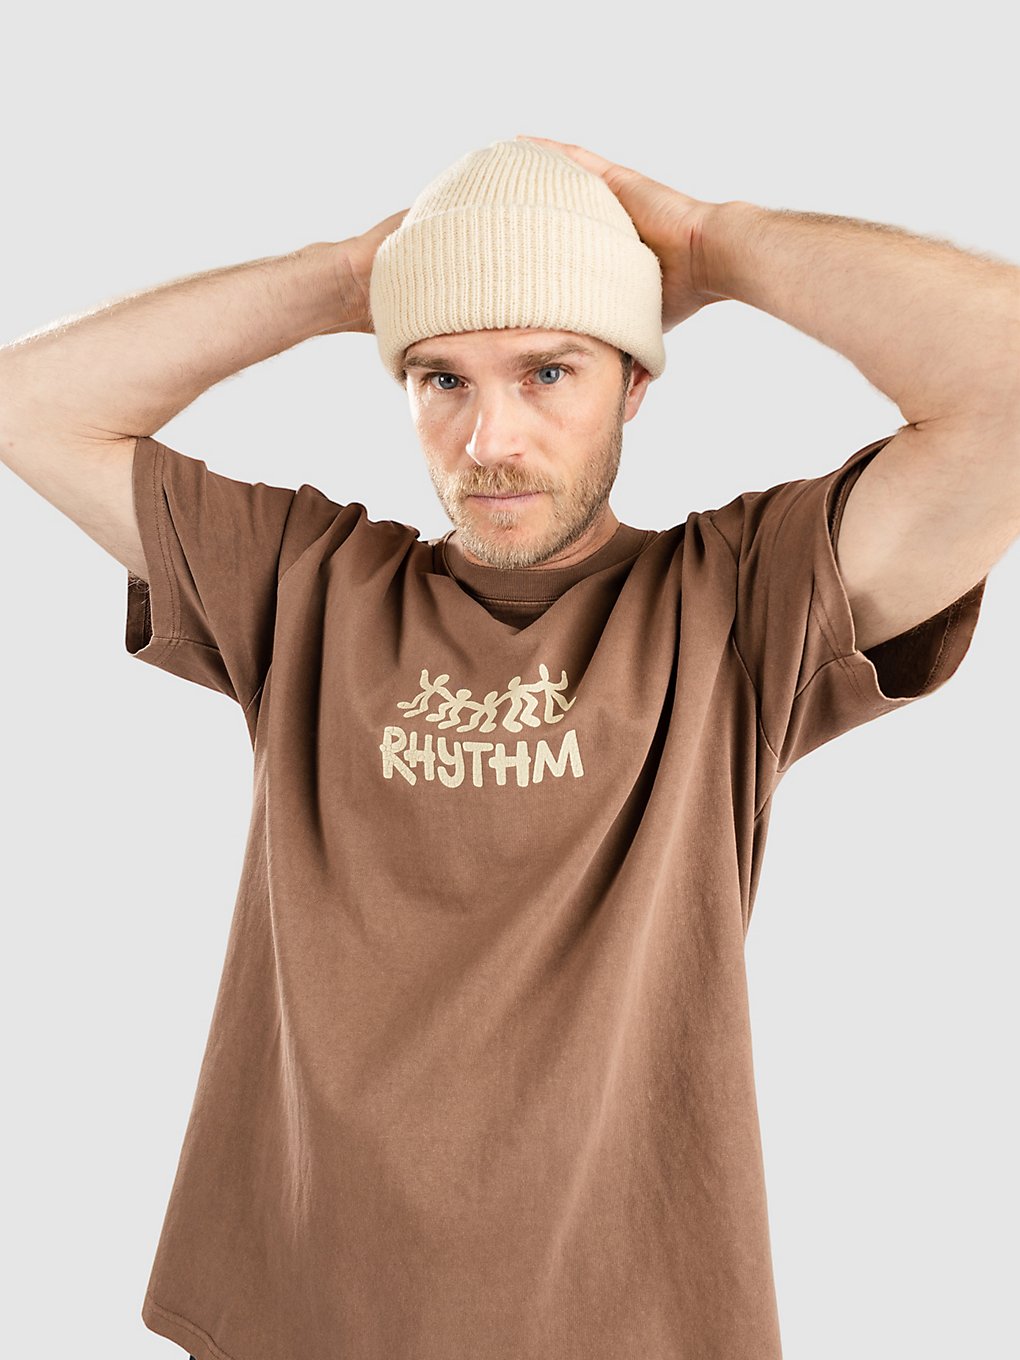 Rhythm 20 Year Vintage T-Shirt bruin